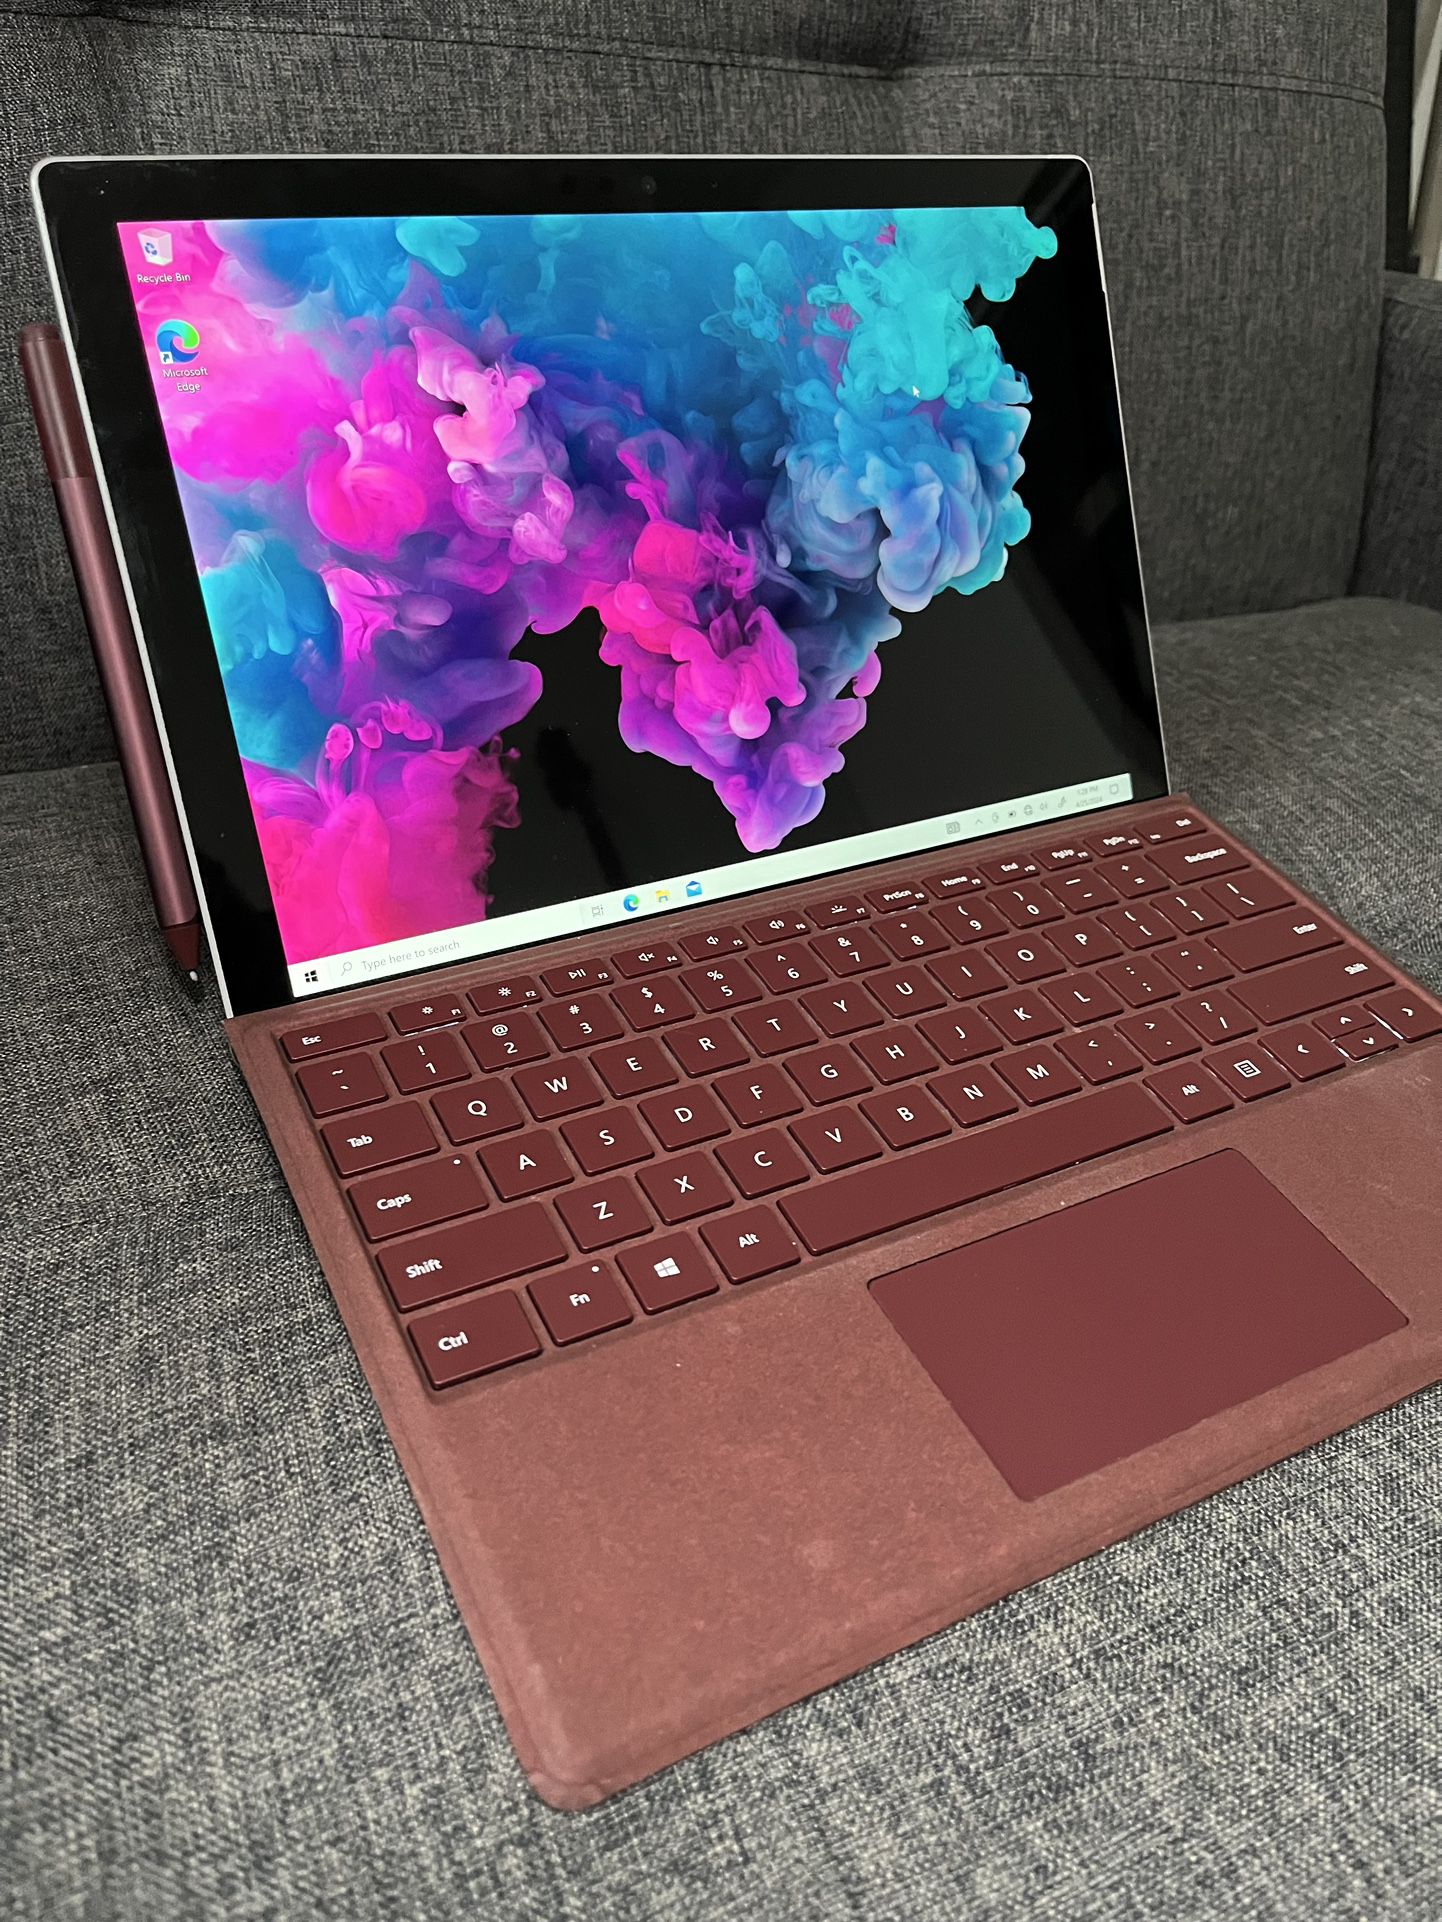 Surface Pro 6 w/ Stylus And Keyboard 